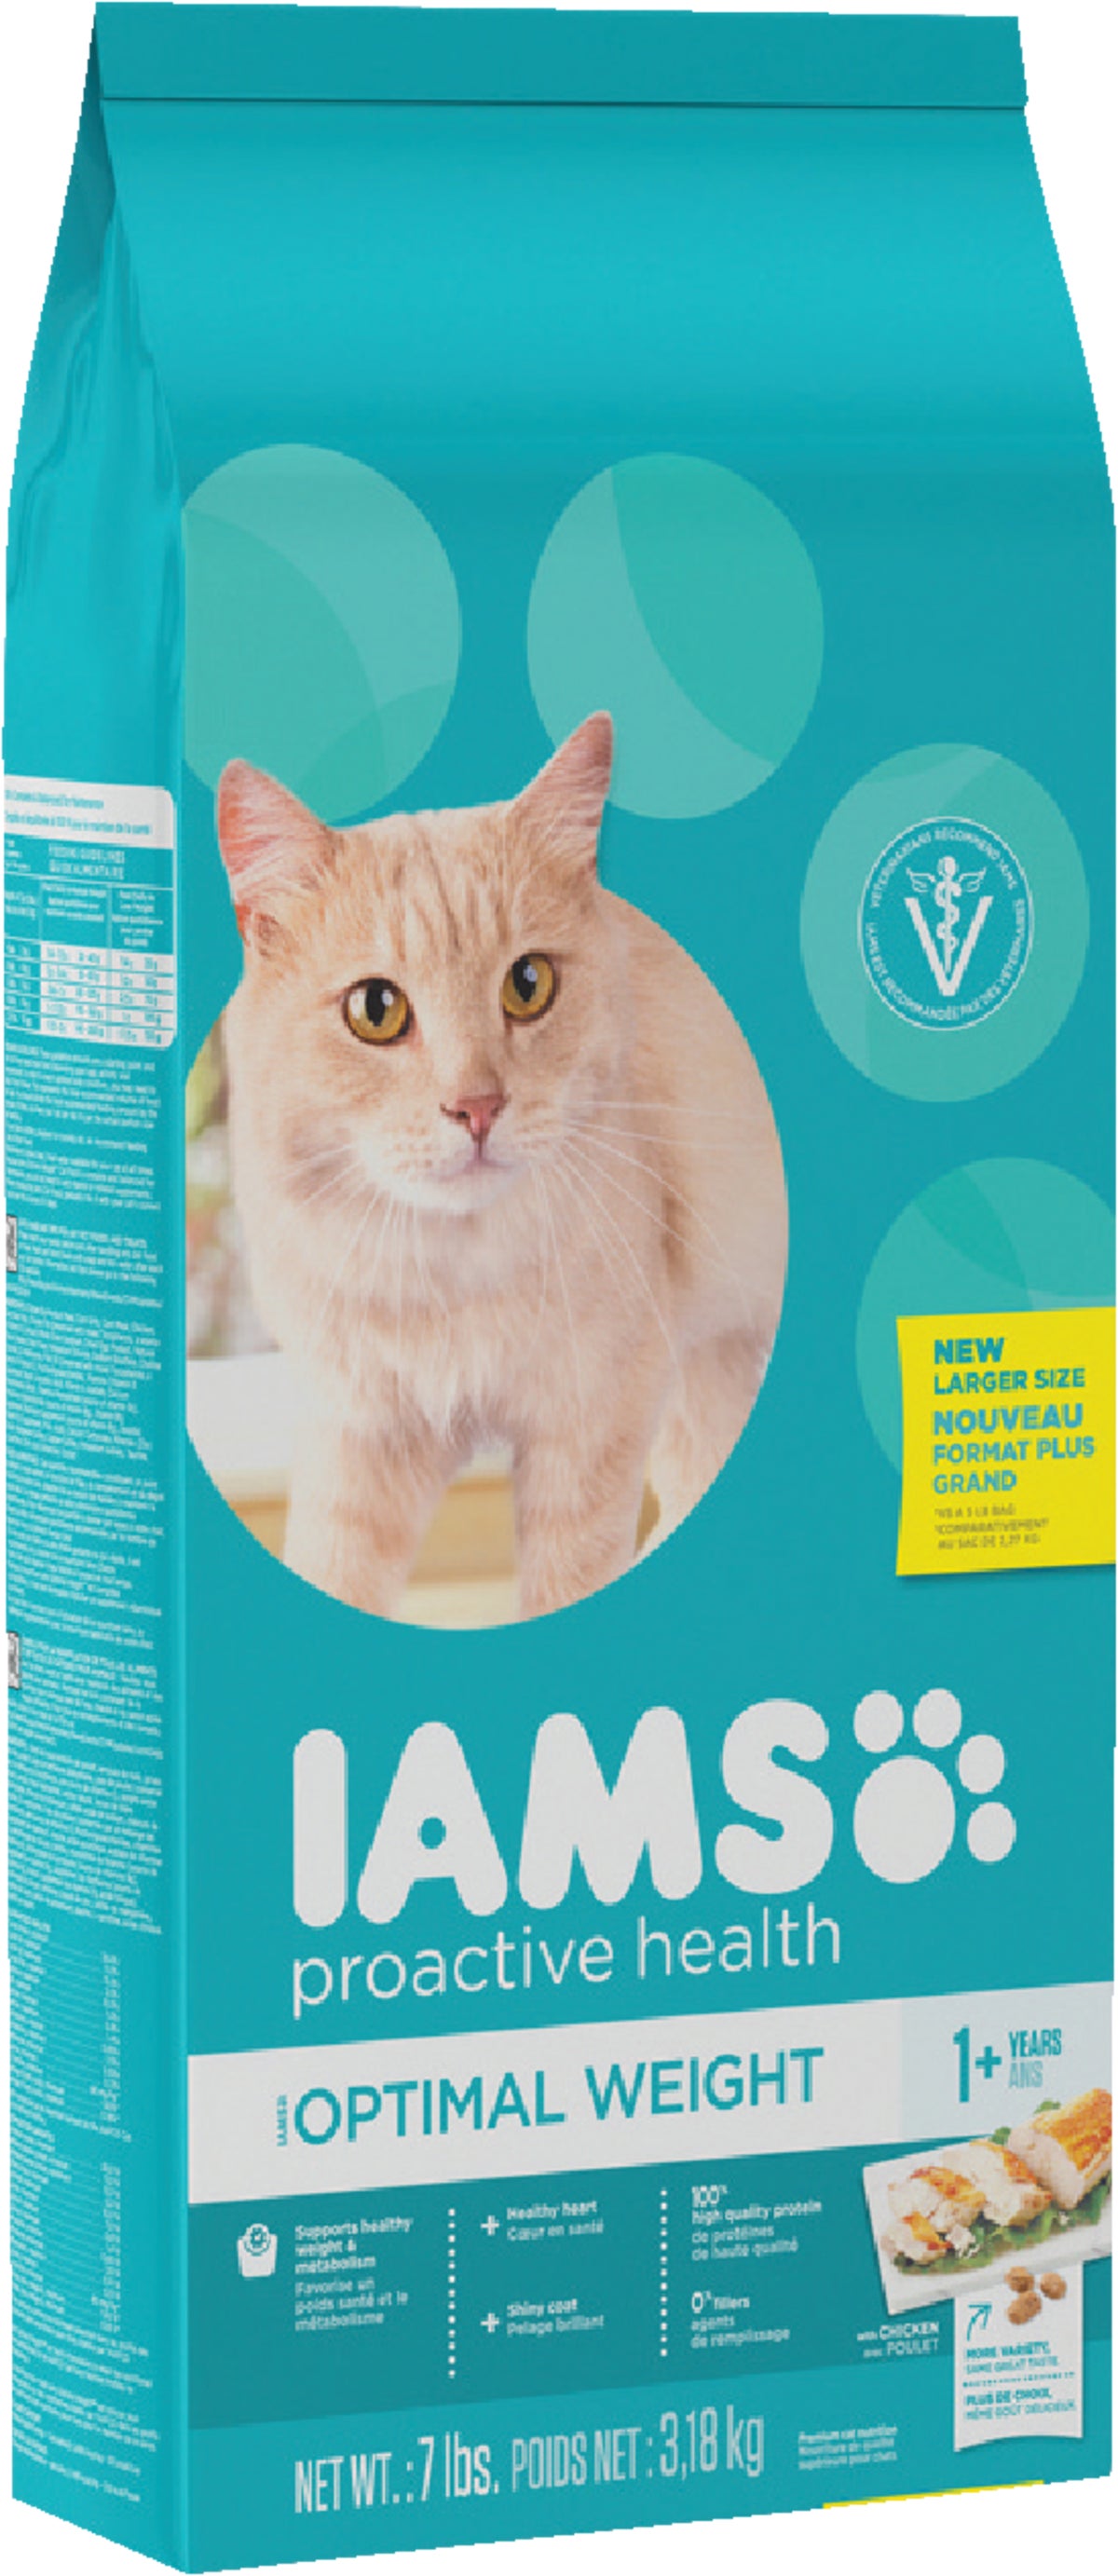 Buy Iams Weight Control Cat Food 7 Lb.